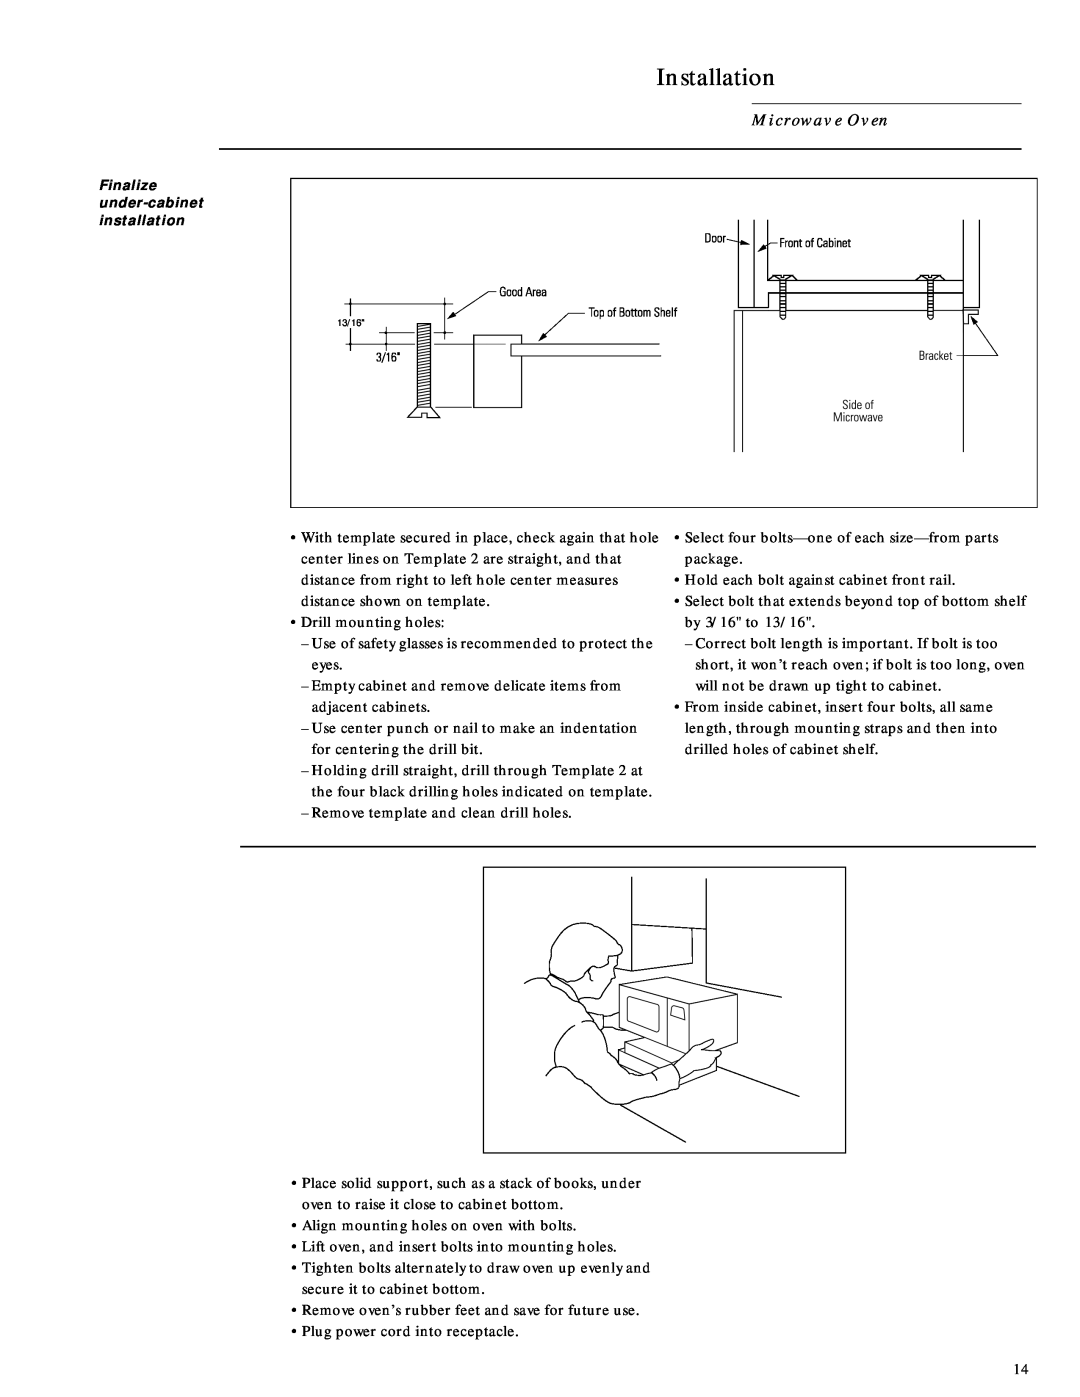 GE Monogram ZEM200WV installation instructions Installation, Microwav e Oven, Finalize under-cabinetinstallation 